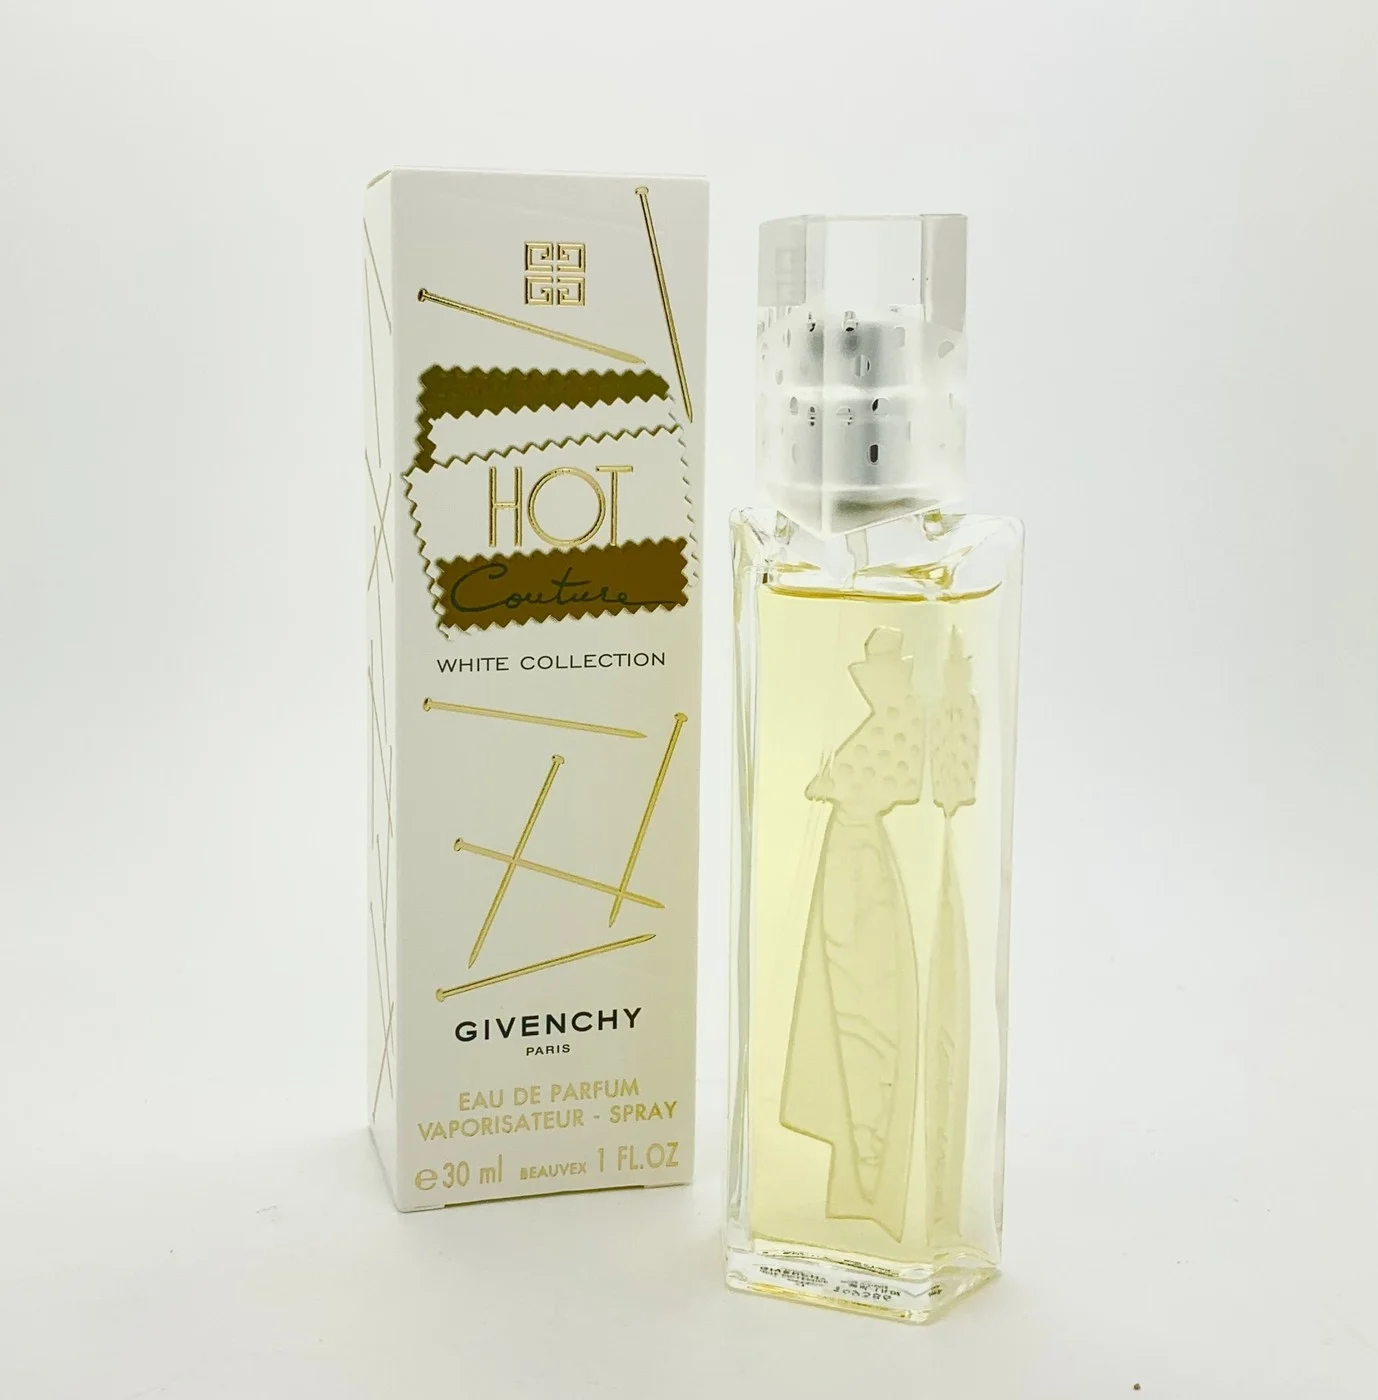 Givenchy Hot Couture White Collection Eau de Parfum Spray 50ml For Women